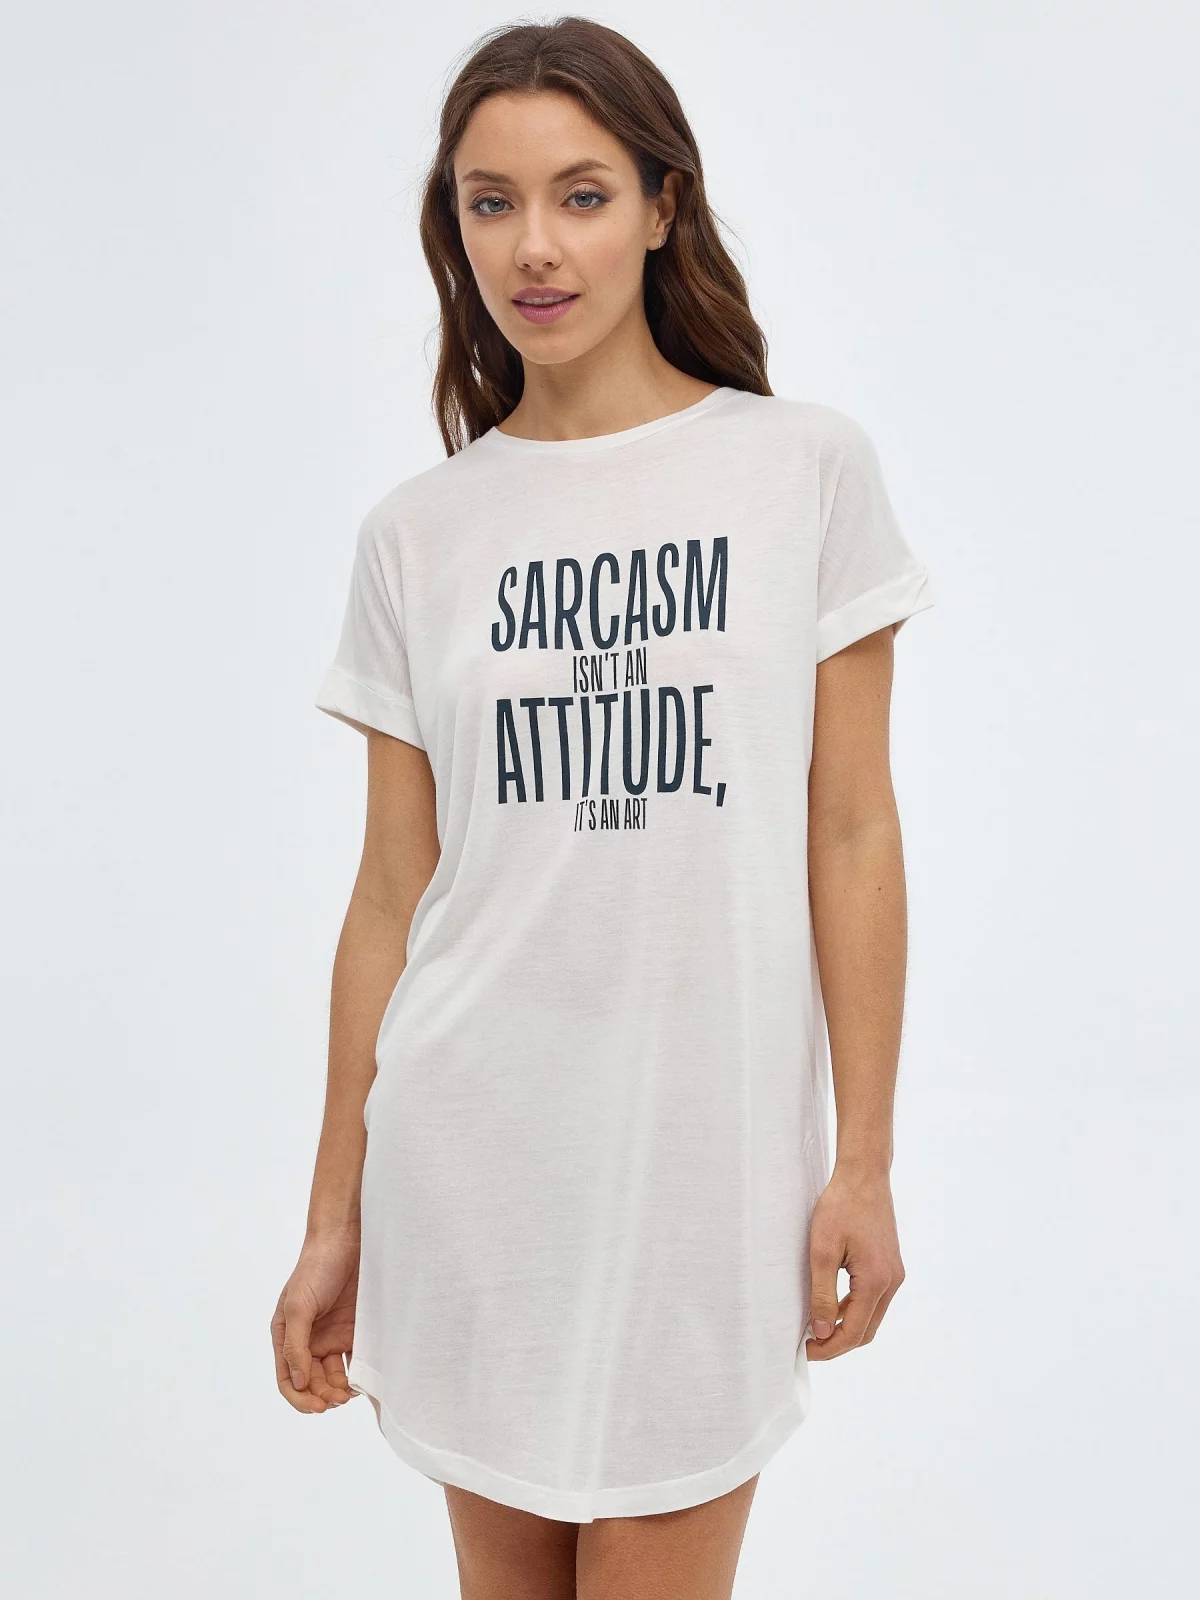 Camiseta Sarcasm blanco roto vista media frontal